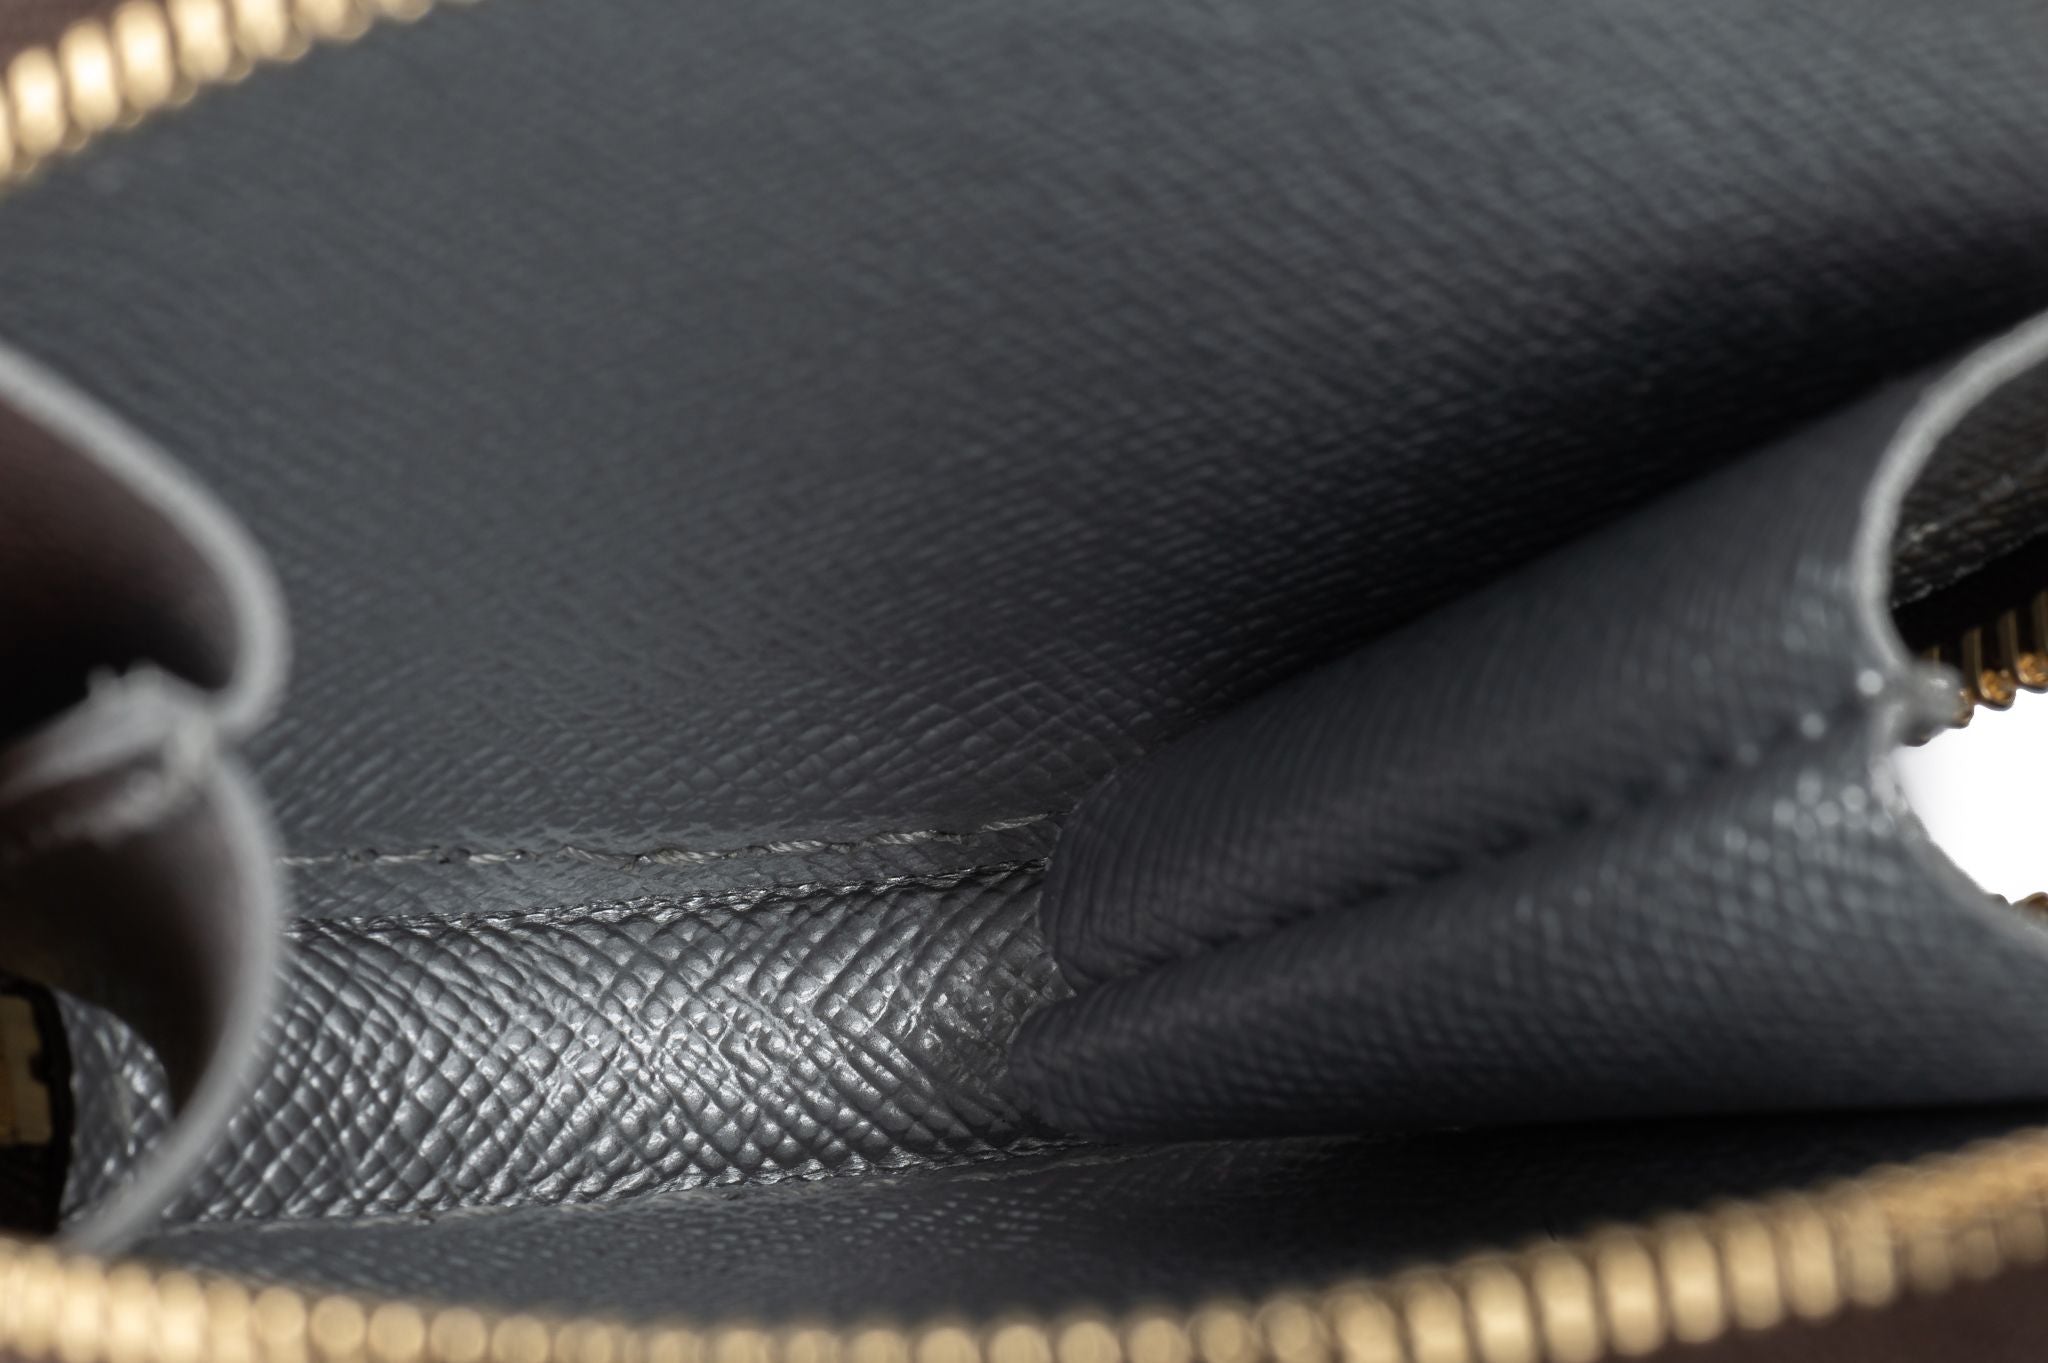 Louis Vuitton Pillow capsule Maxi Pochette shoulder bag in silver nylon, SHW